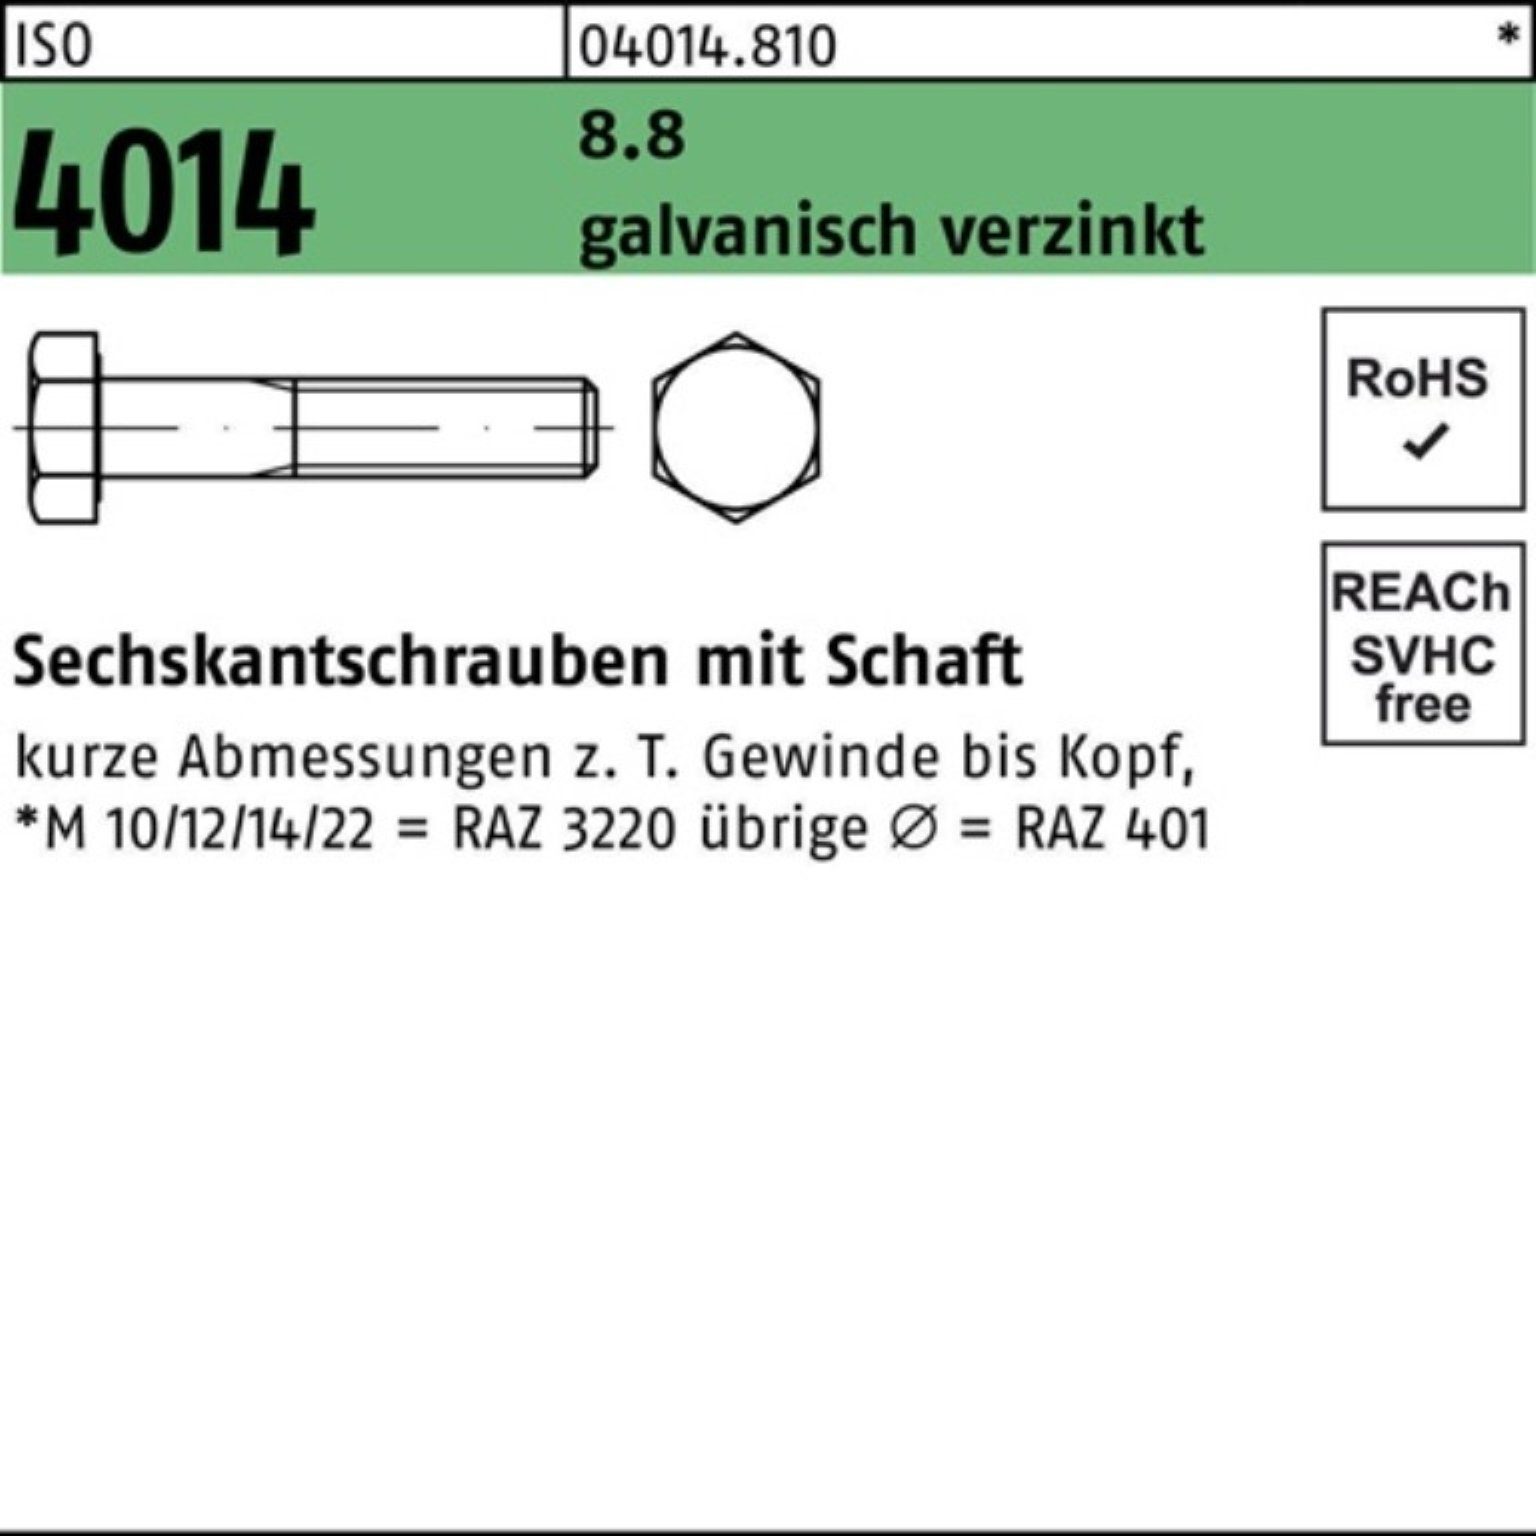 Bufab Sechskantschraube 100er Pack Sechskantschraube ISO 4014 Schaft M36x 170 8.8 galv.verz. 1 | Schrauben